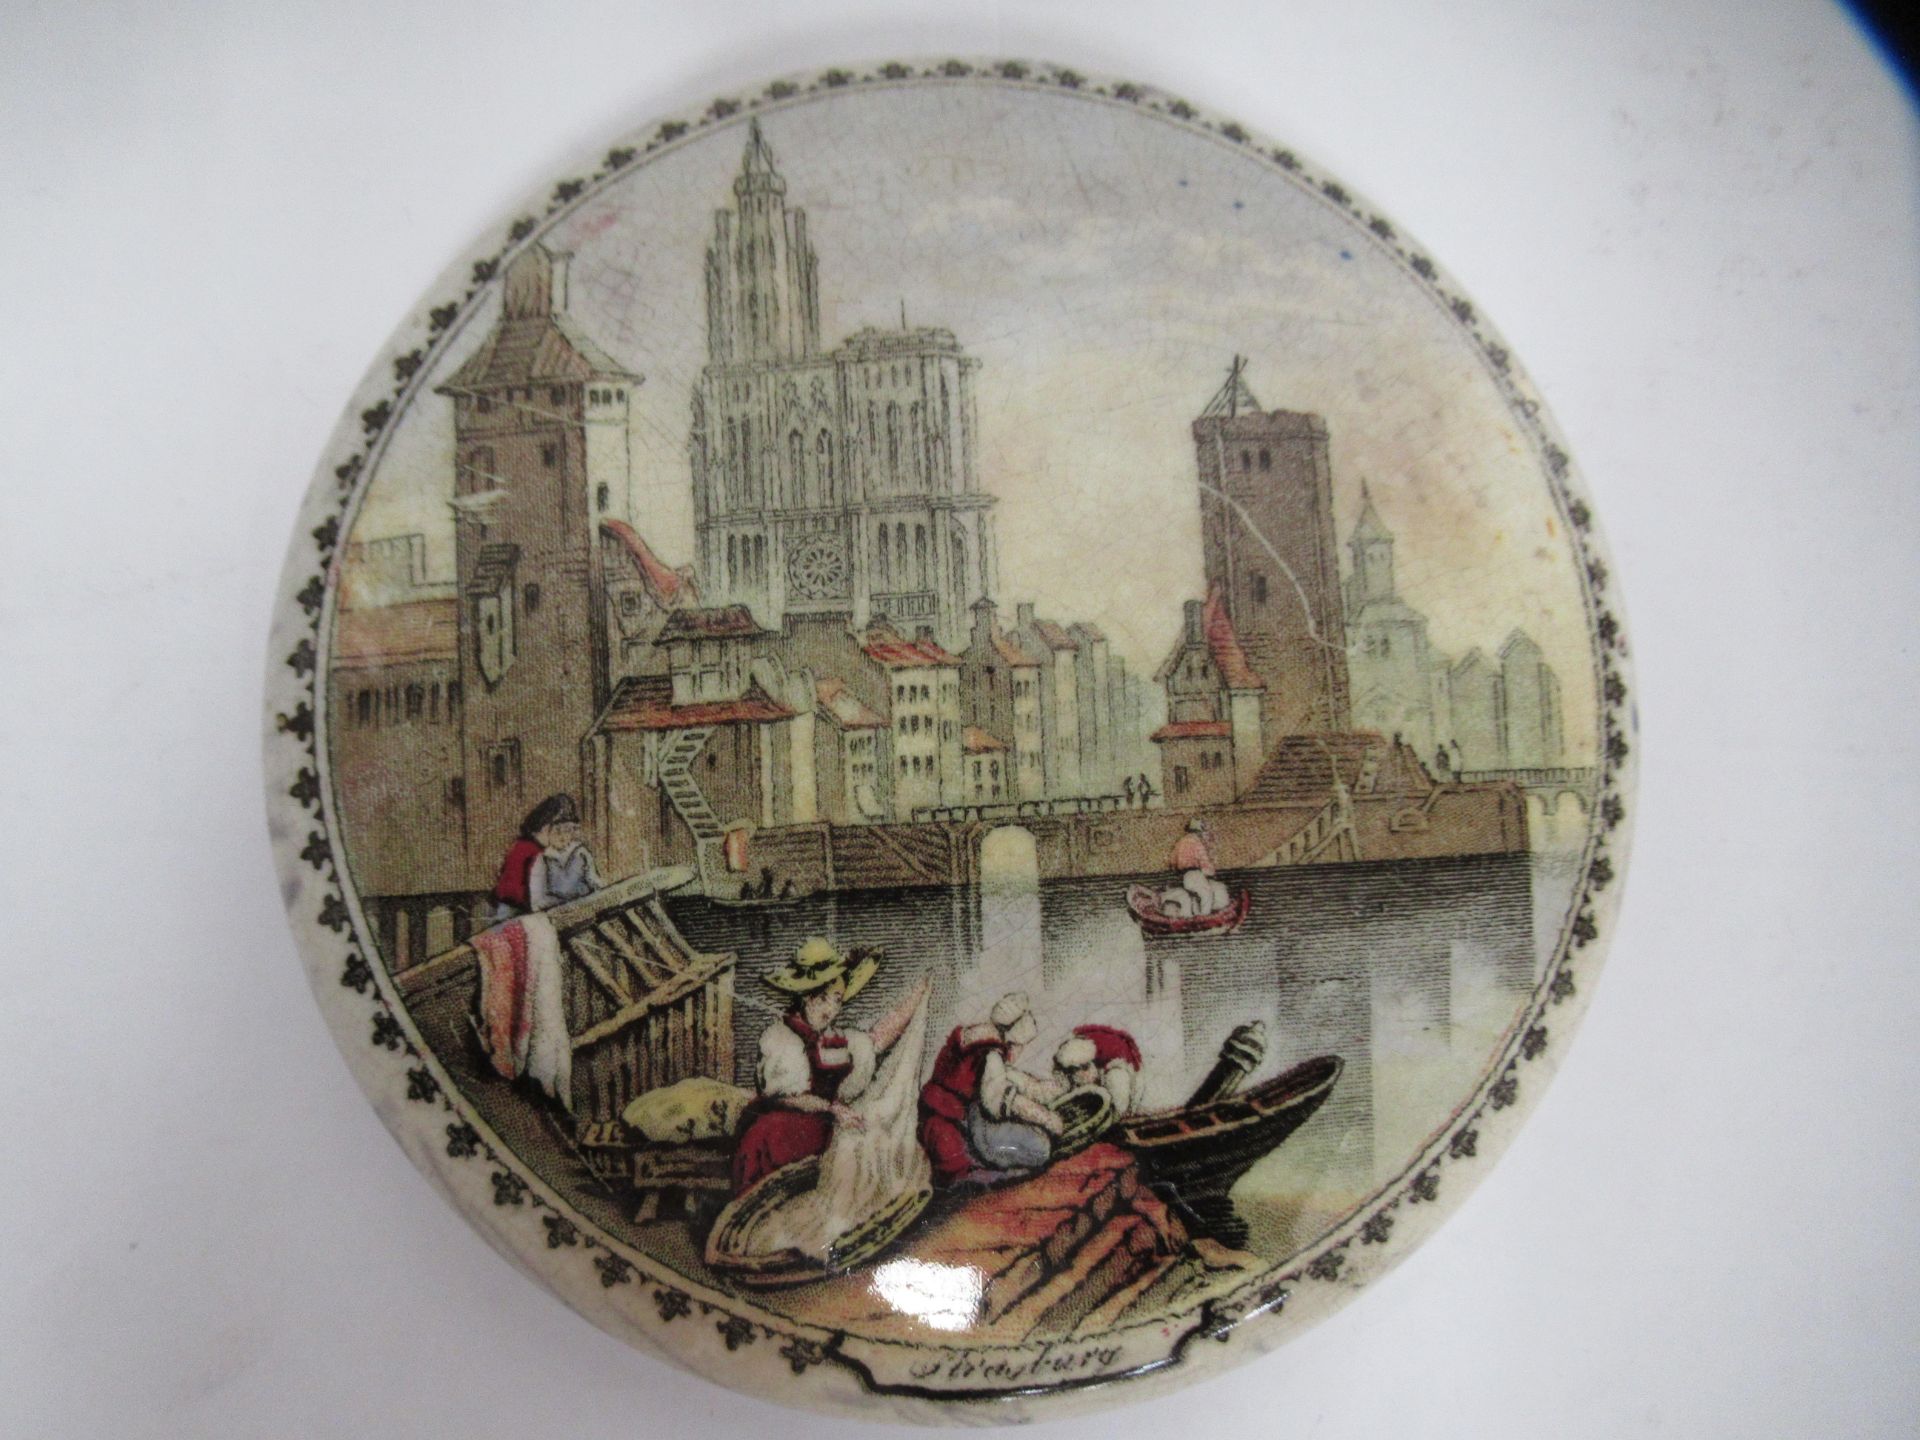 6x Prattware ceramic lids including 'The Residence of Anne Hathaway', 'Strasburg', 'Albert Memorial' - Image 17 of 36